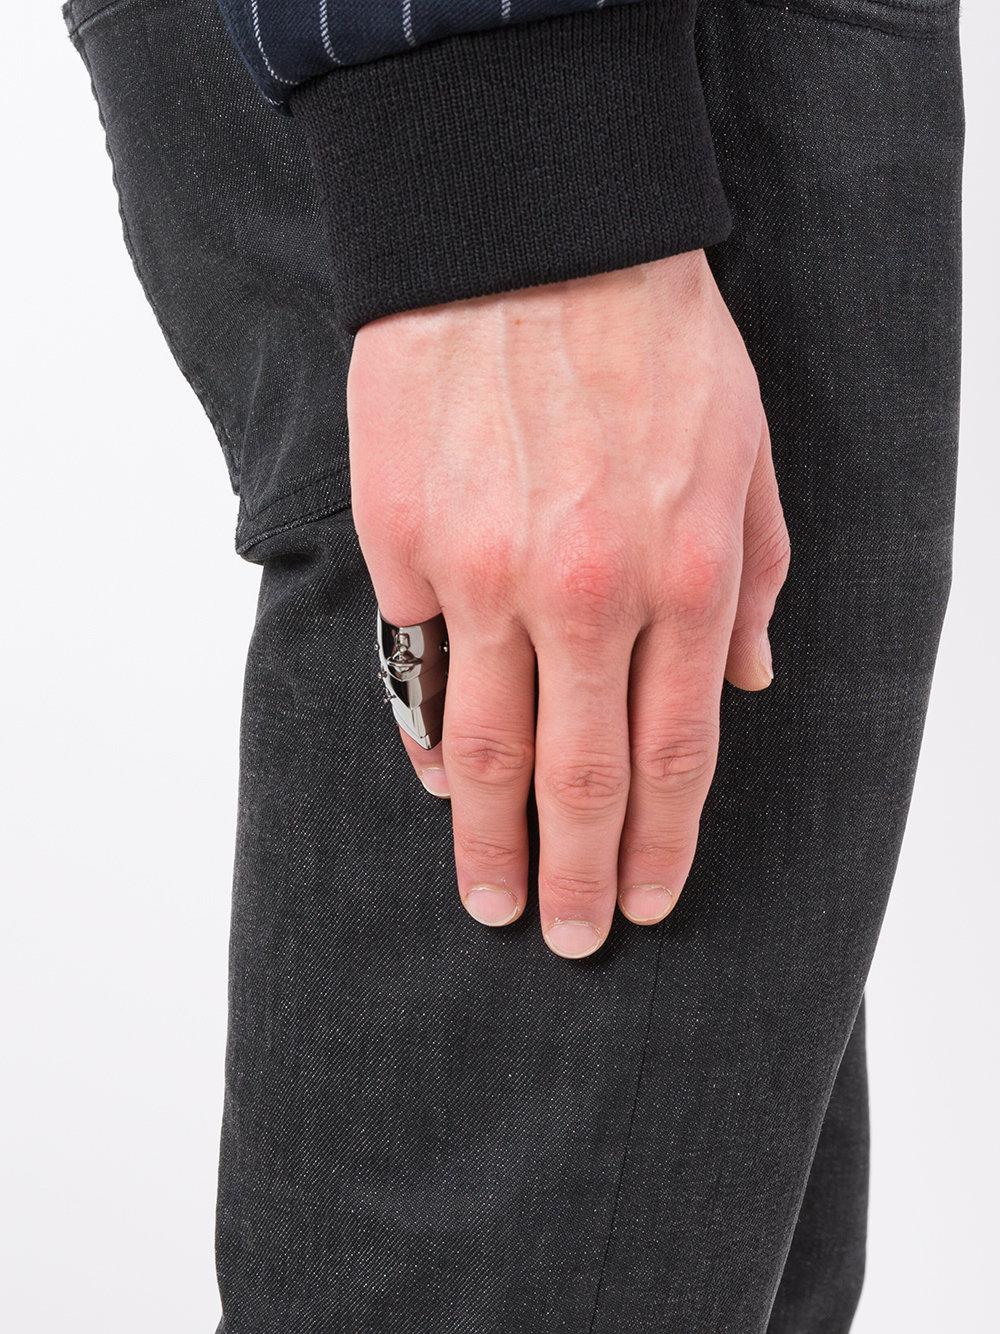 Vivienne Westwood Armour Knuckle Ring, $239, farfetch.com